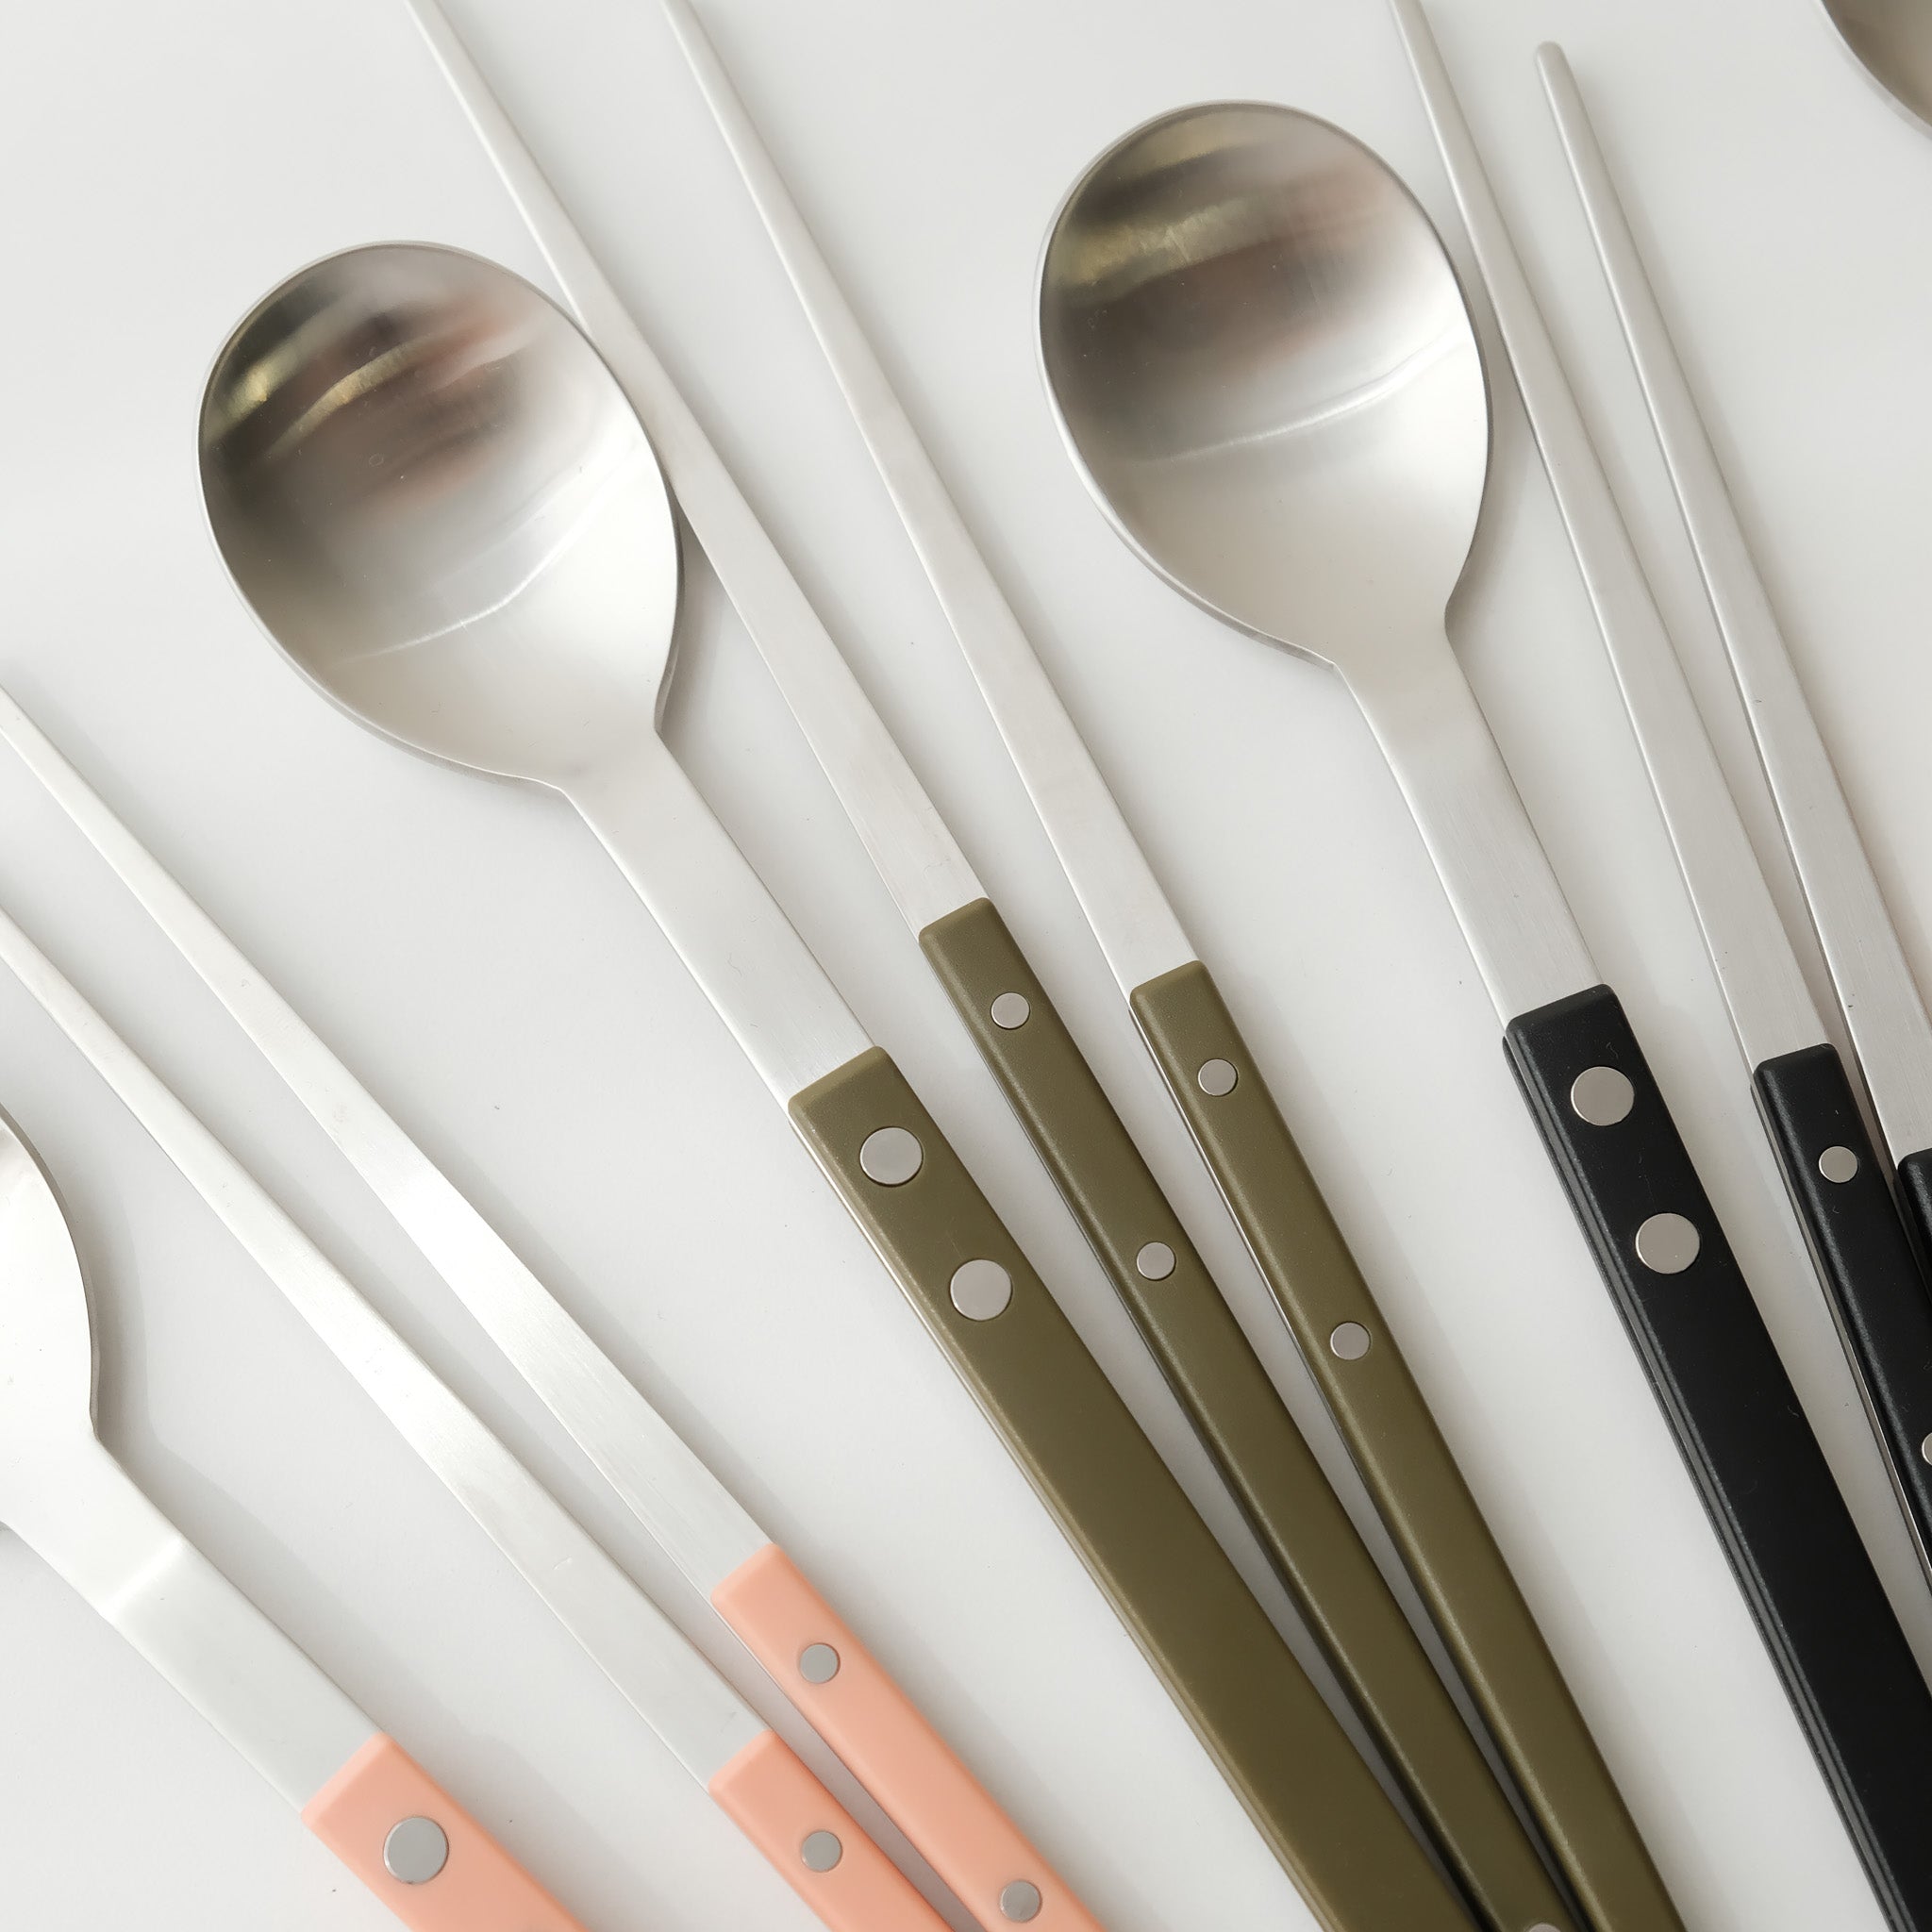 Bistro Spoon and Chopsticks Sets